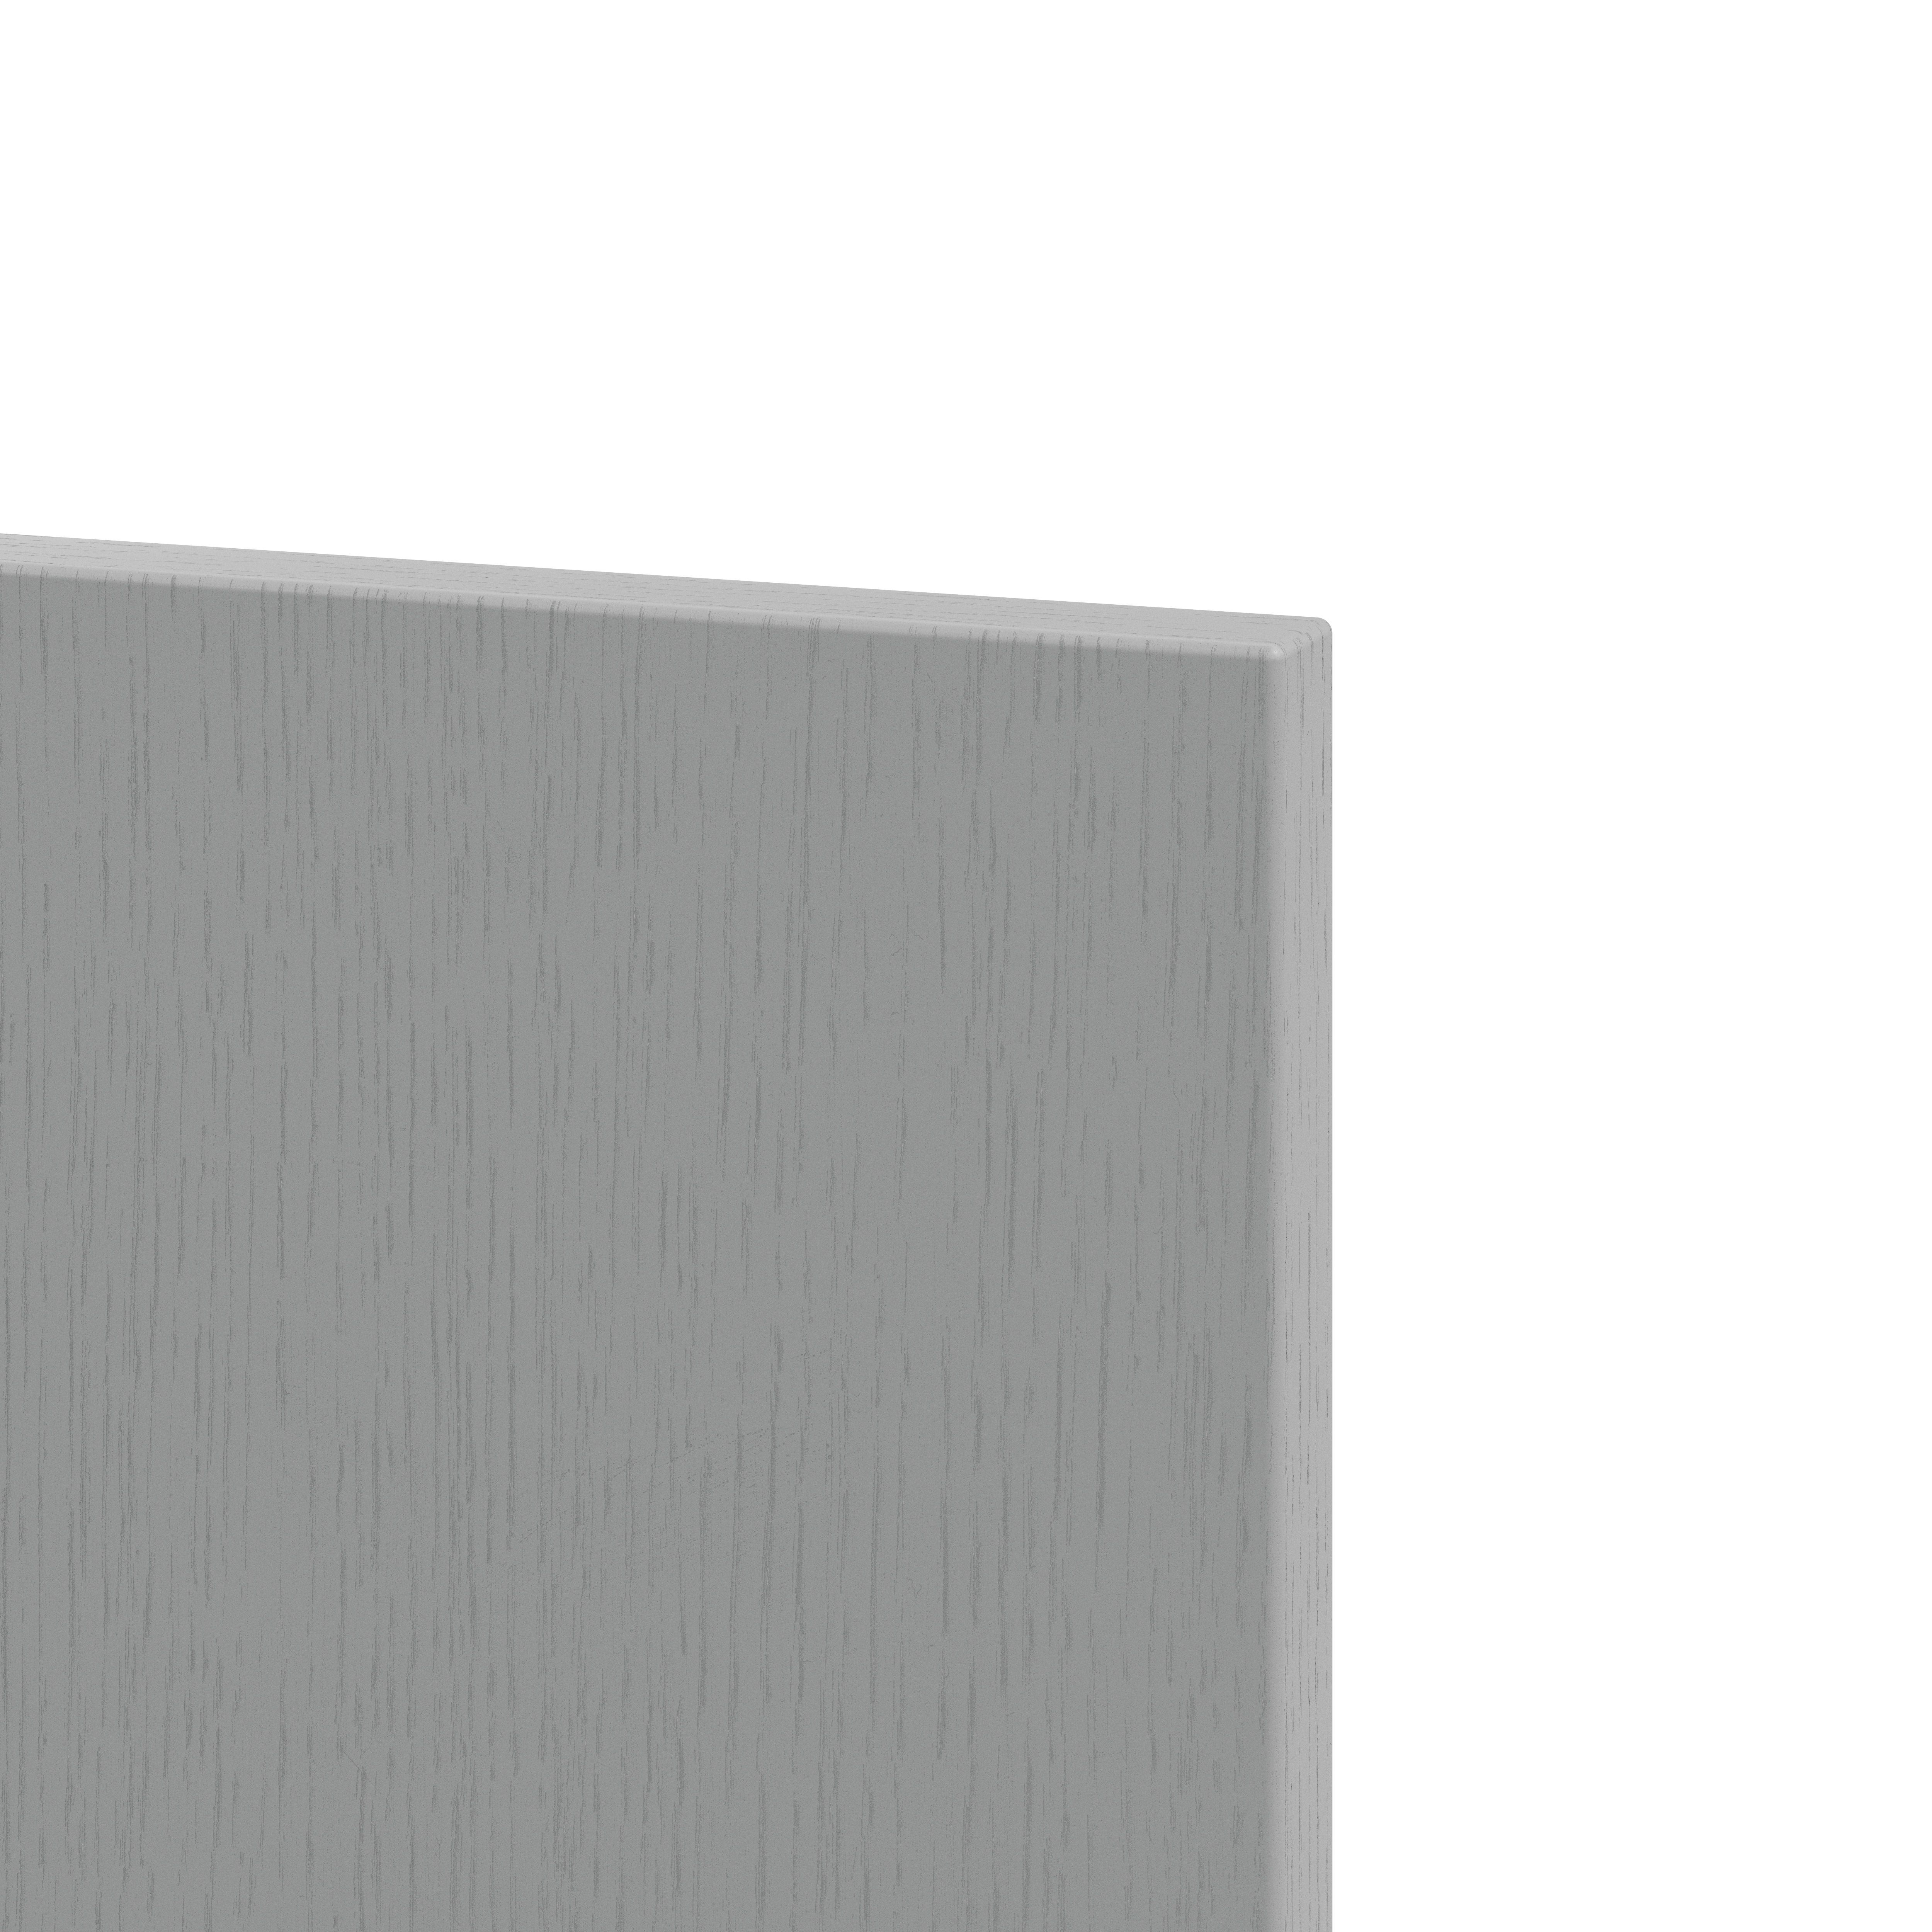 GoodHome Alpinia Matt Slate Grey Painted Wood Effect Shaker Tall Appliance & larder End panel (H)2190mm (W)570mm, Pair